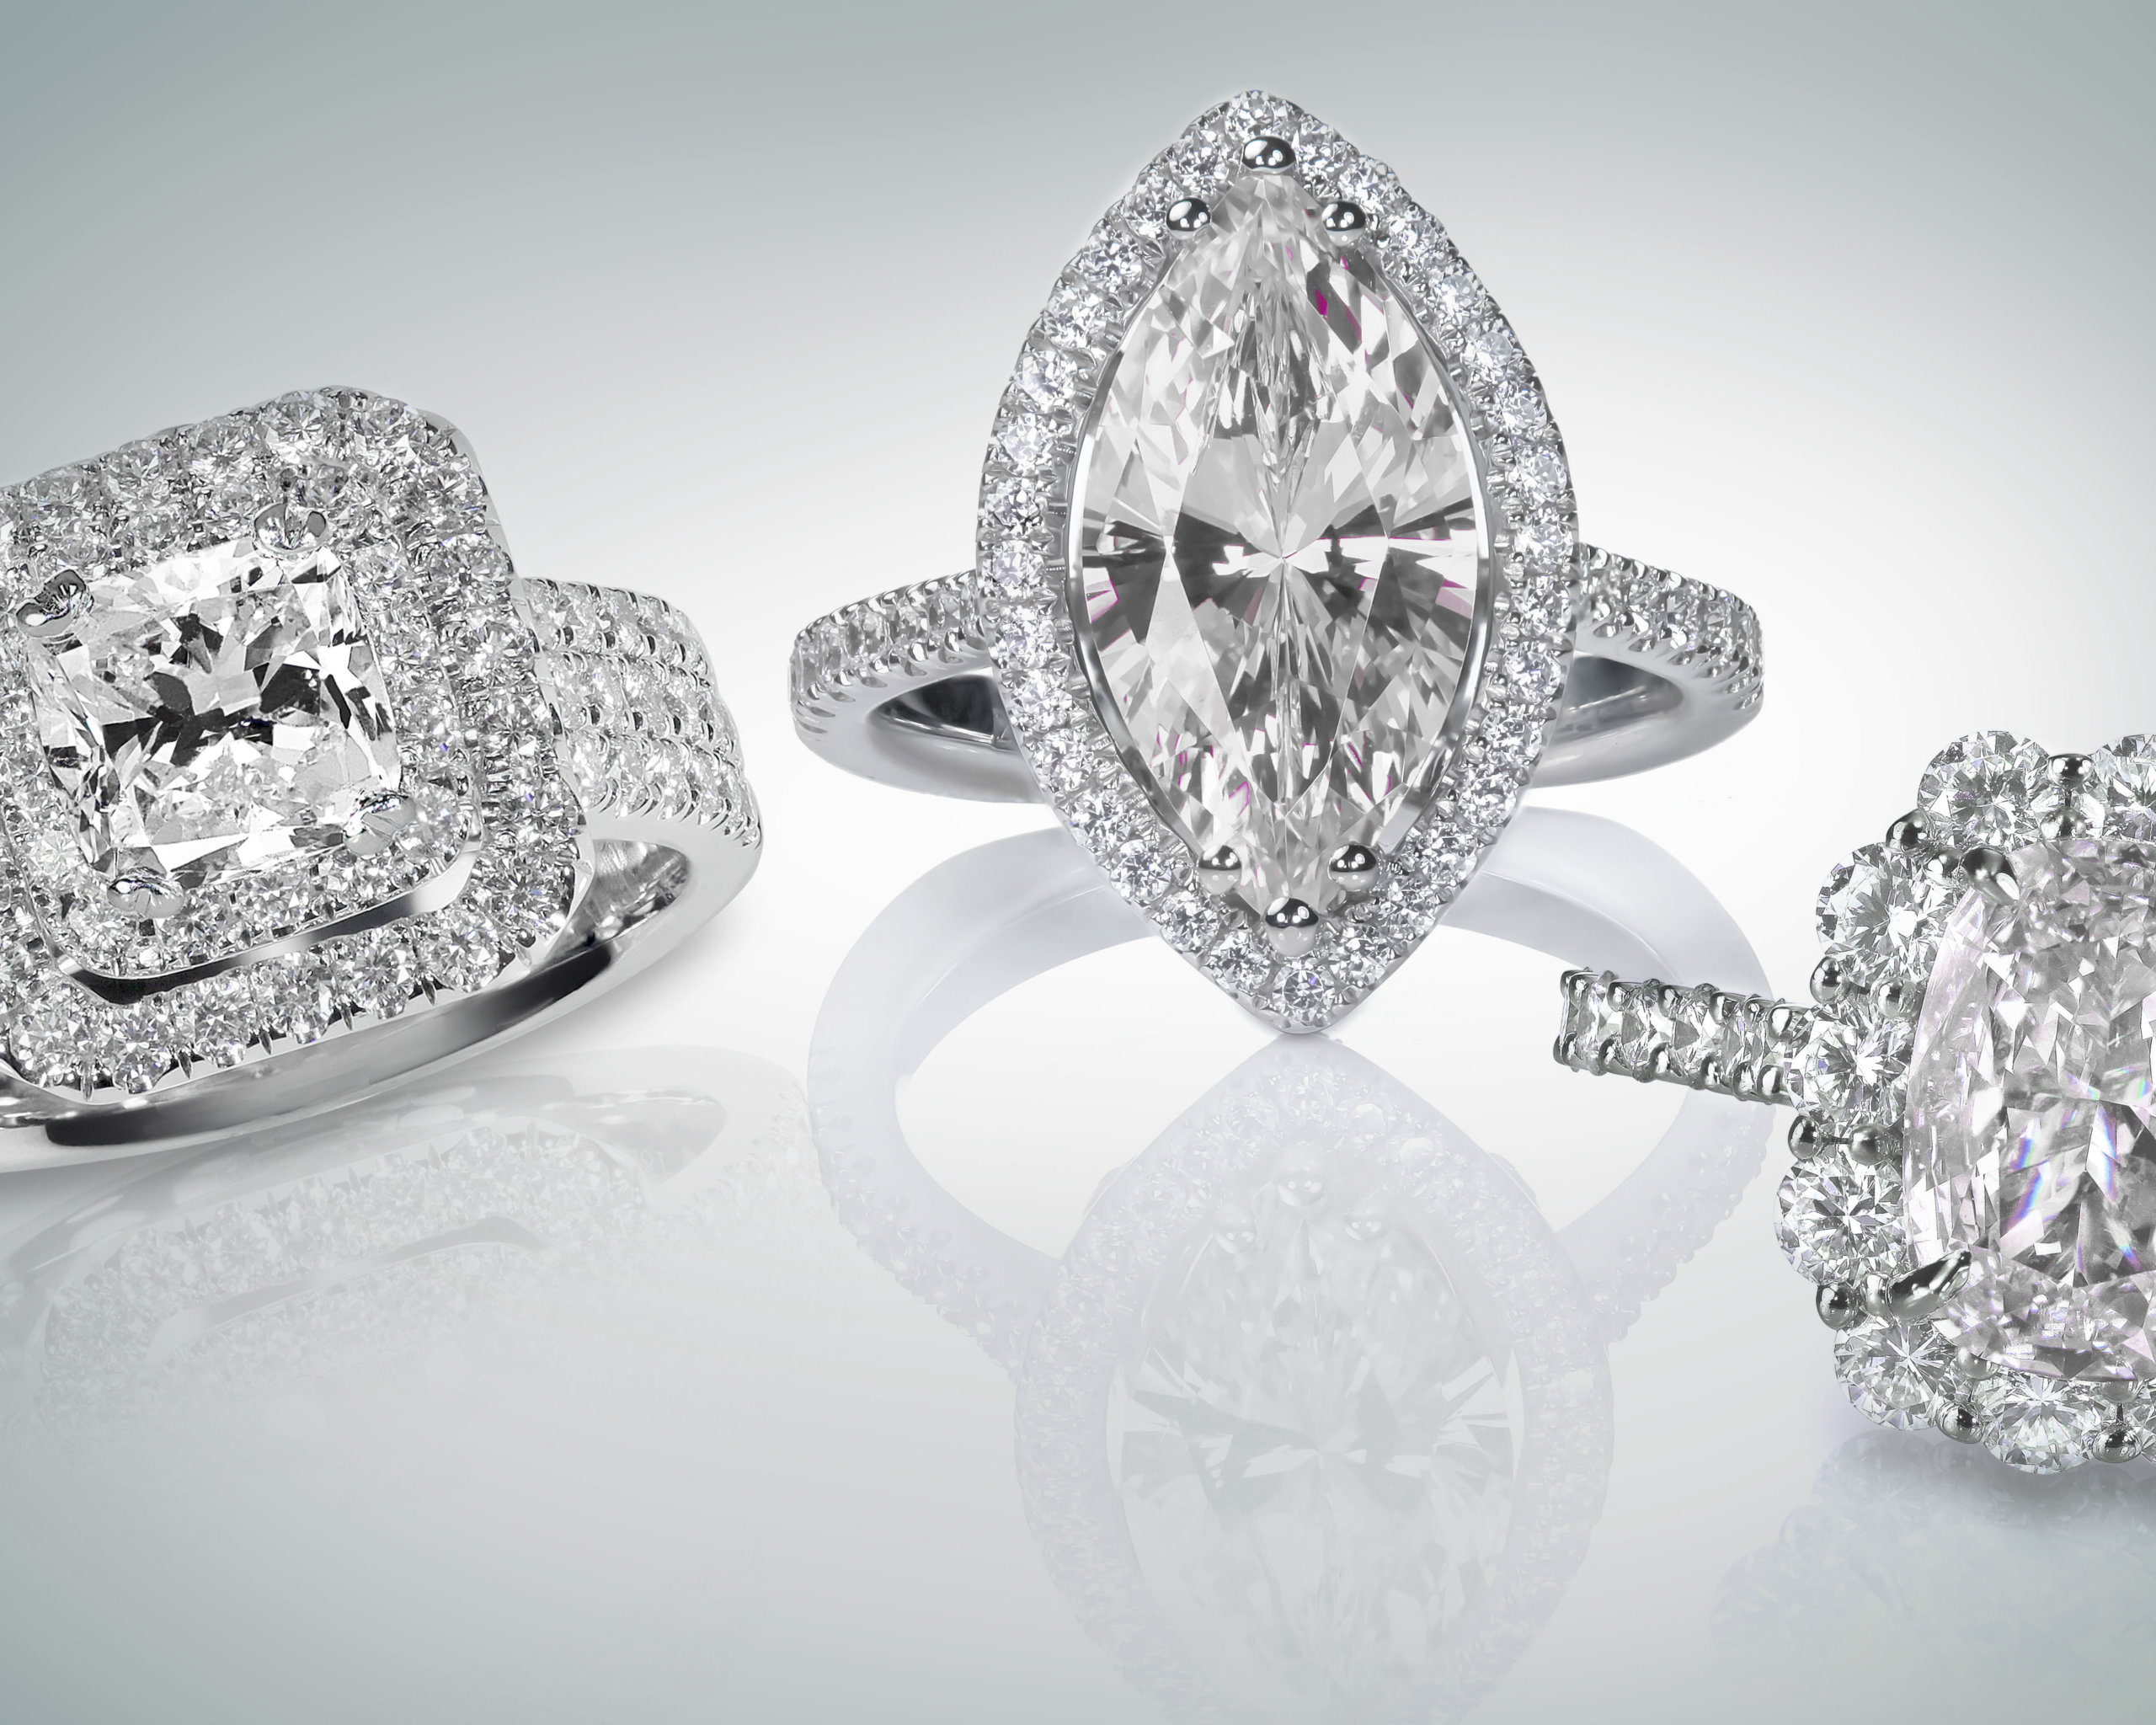 Best diamond clarity grade for engagement rings